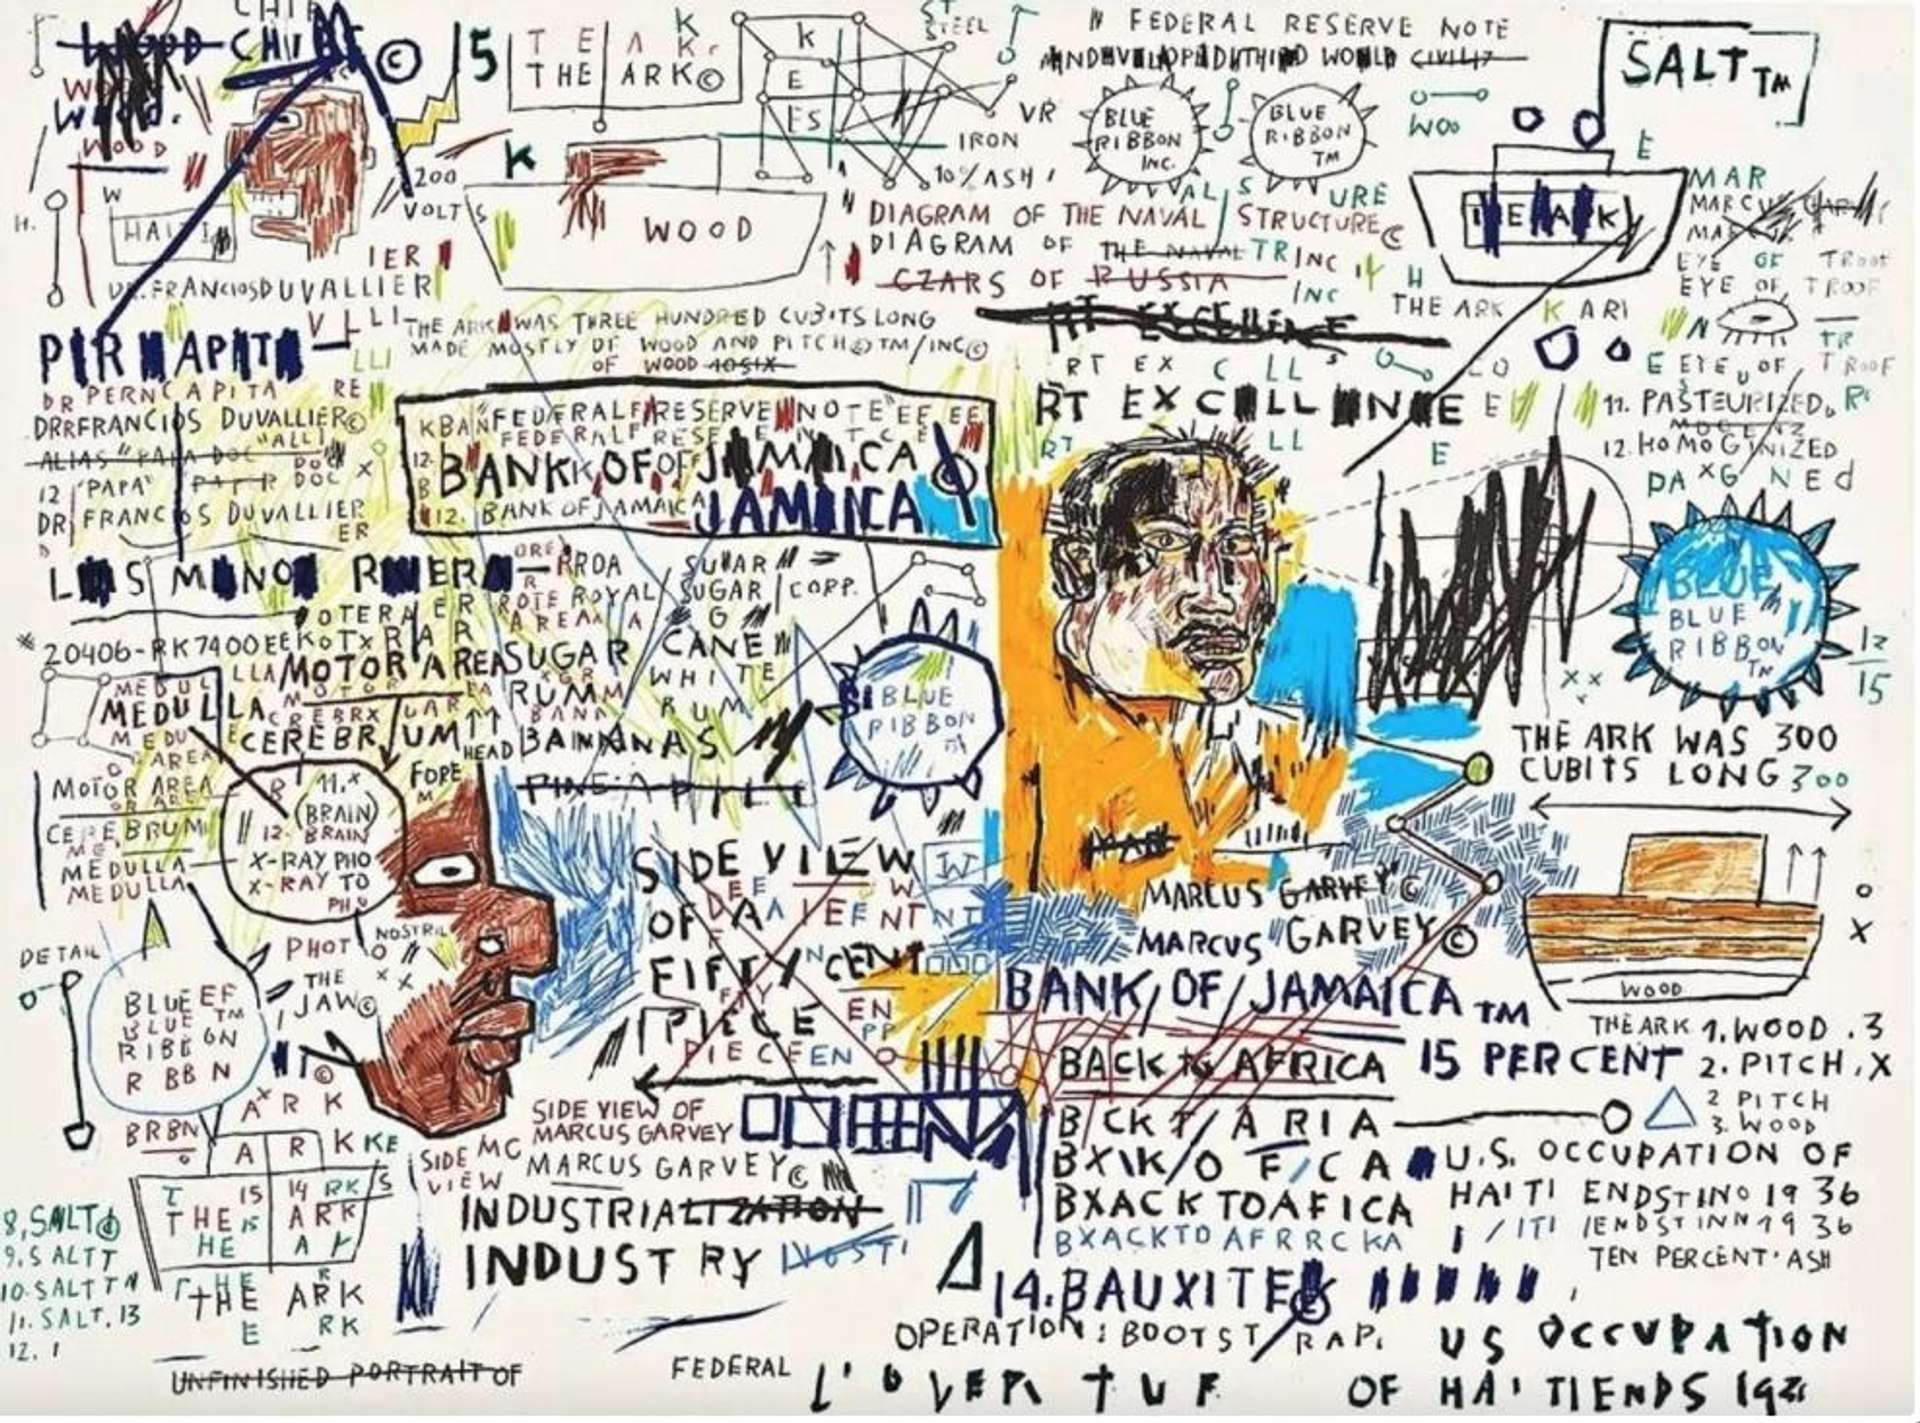 50 Cent Piece - Unsigned Print by Jean-Michel Basquiat 2019 - MyArtBroker